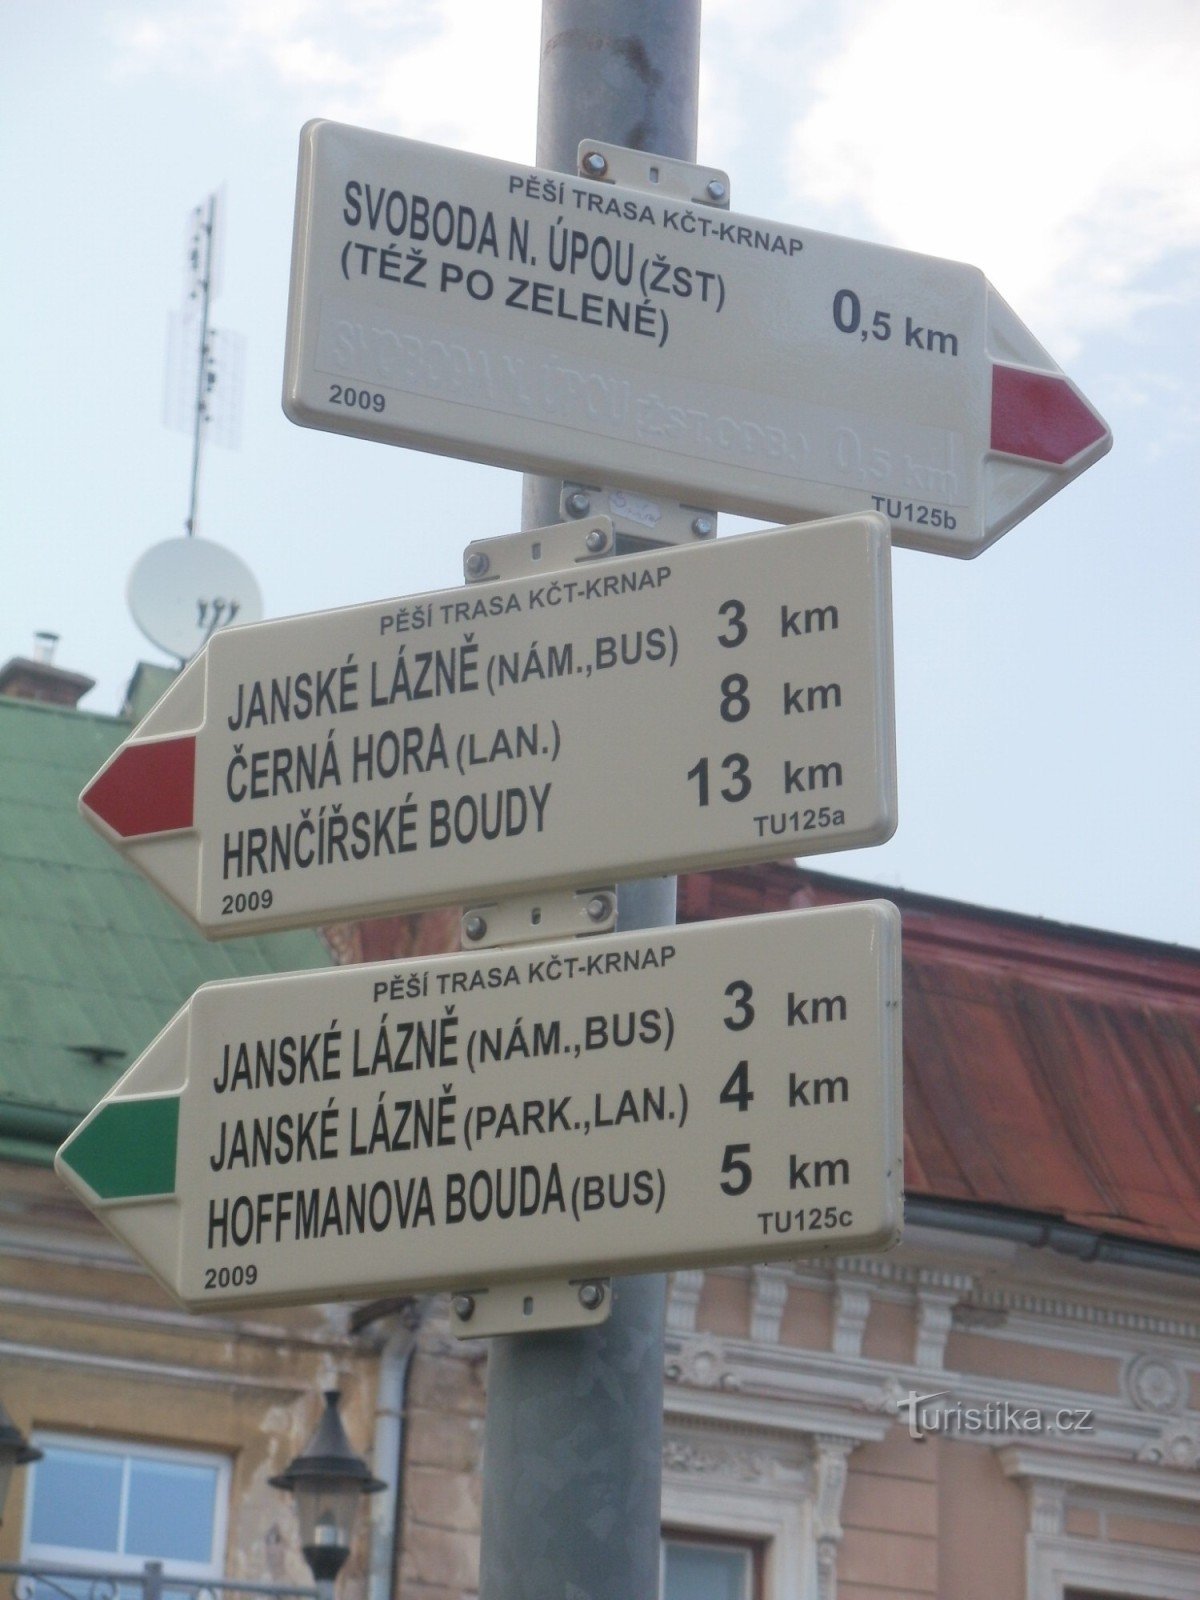 туристический перекресток Свобода-над-Упоу - площадь Сворности